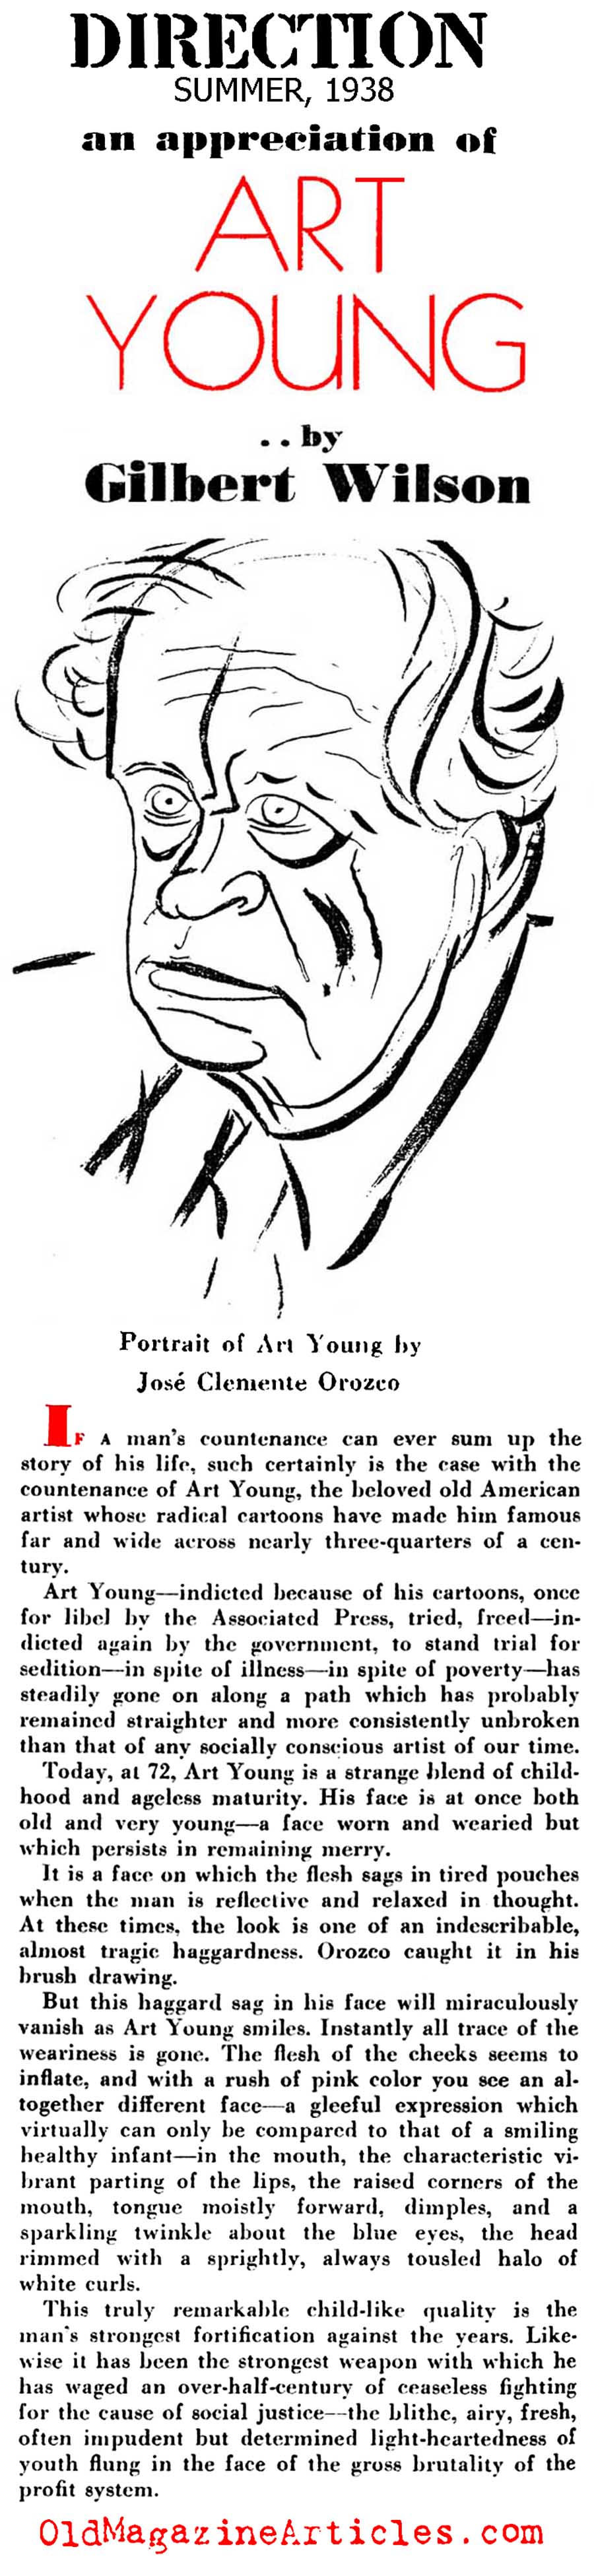 Leftist Cartoonist Art Young  (Direction Magazine, 1938)